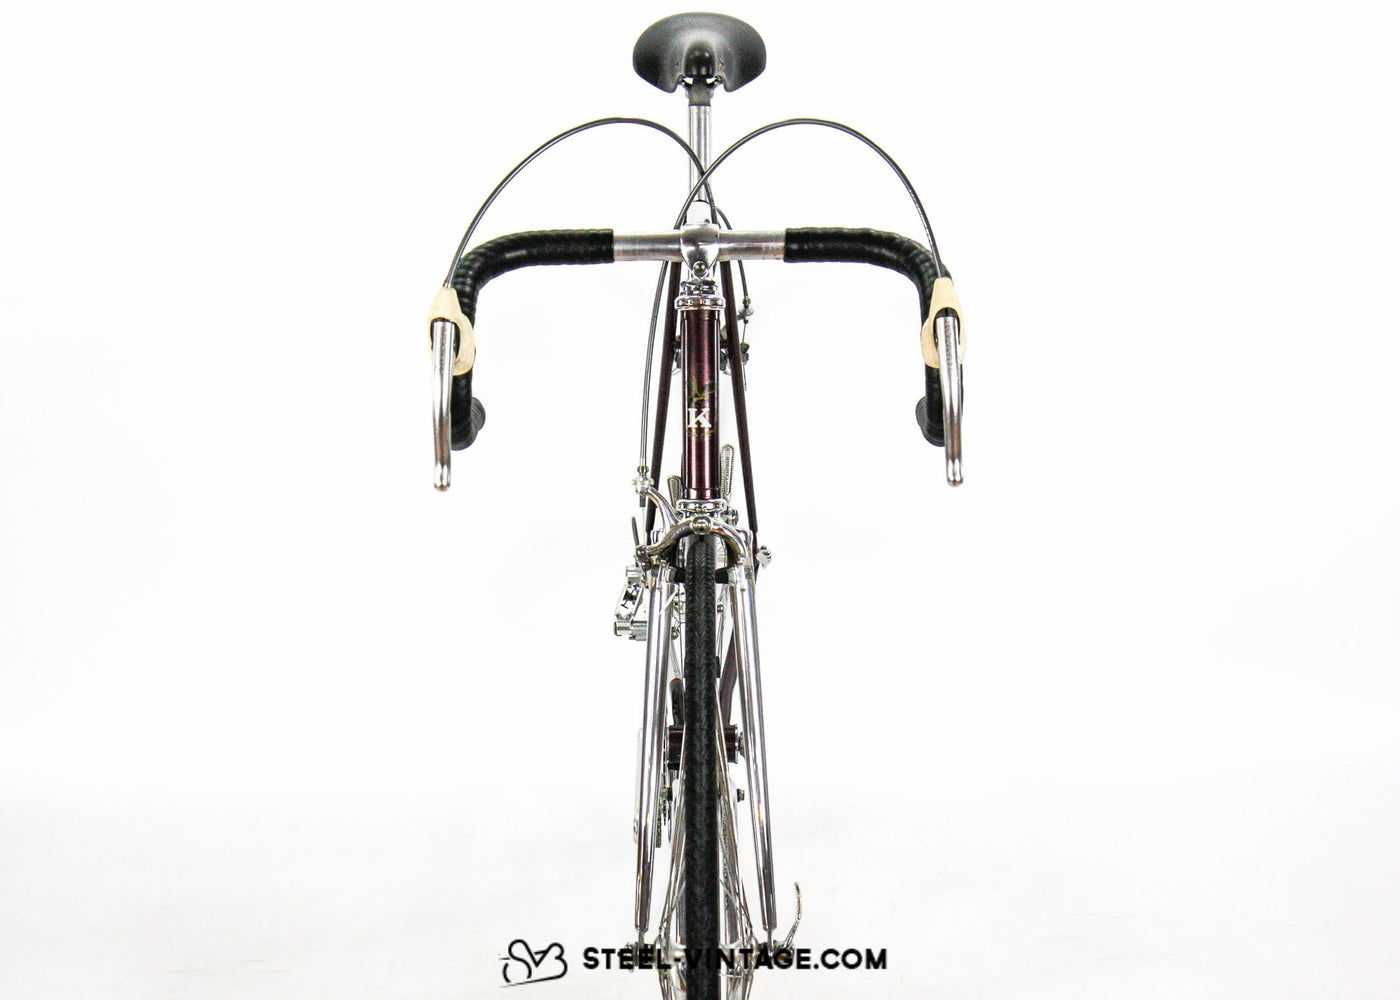 Kotter's Racing Team Tour de France Classic Road Bike - Steel Vintage Bikes